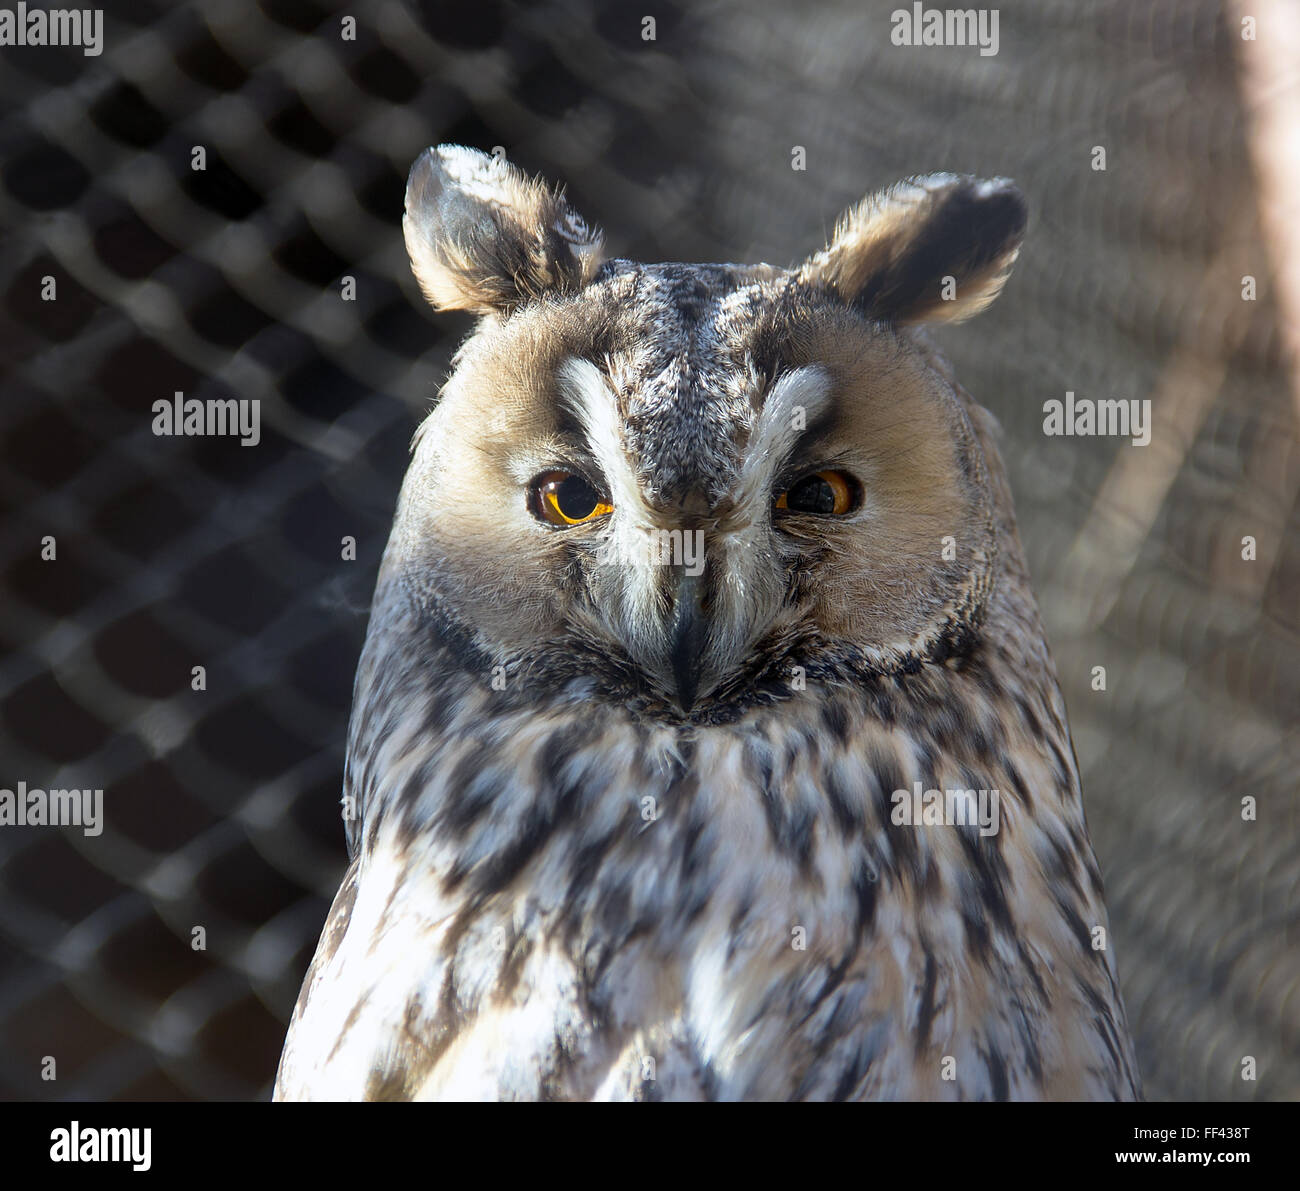 Belgrade ZOO - The Long-eared Owl (Asio otus) posing Stock Photo